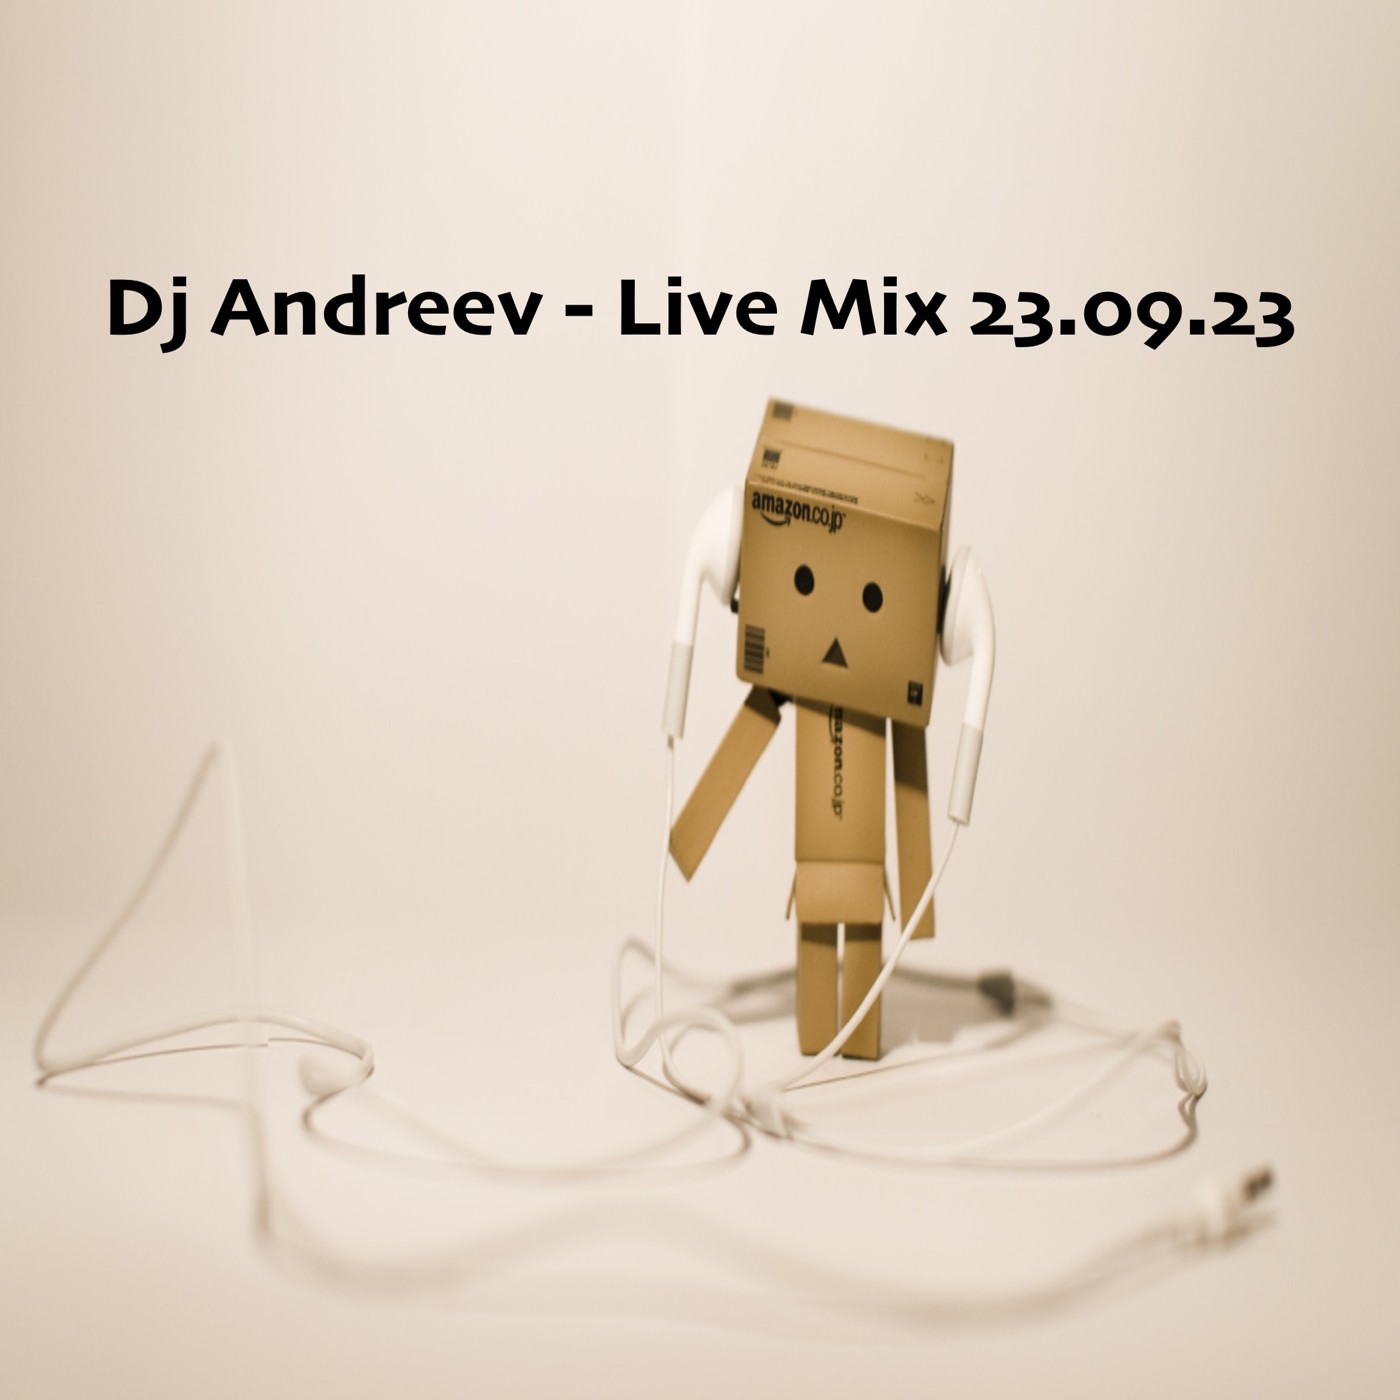 Dj Andreev - Live Mix 23.09.23